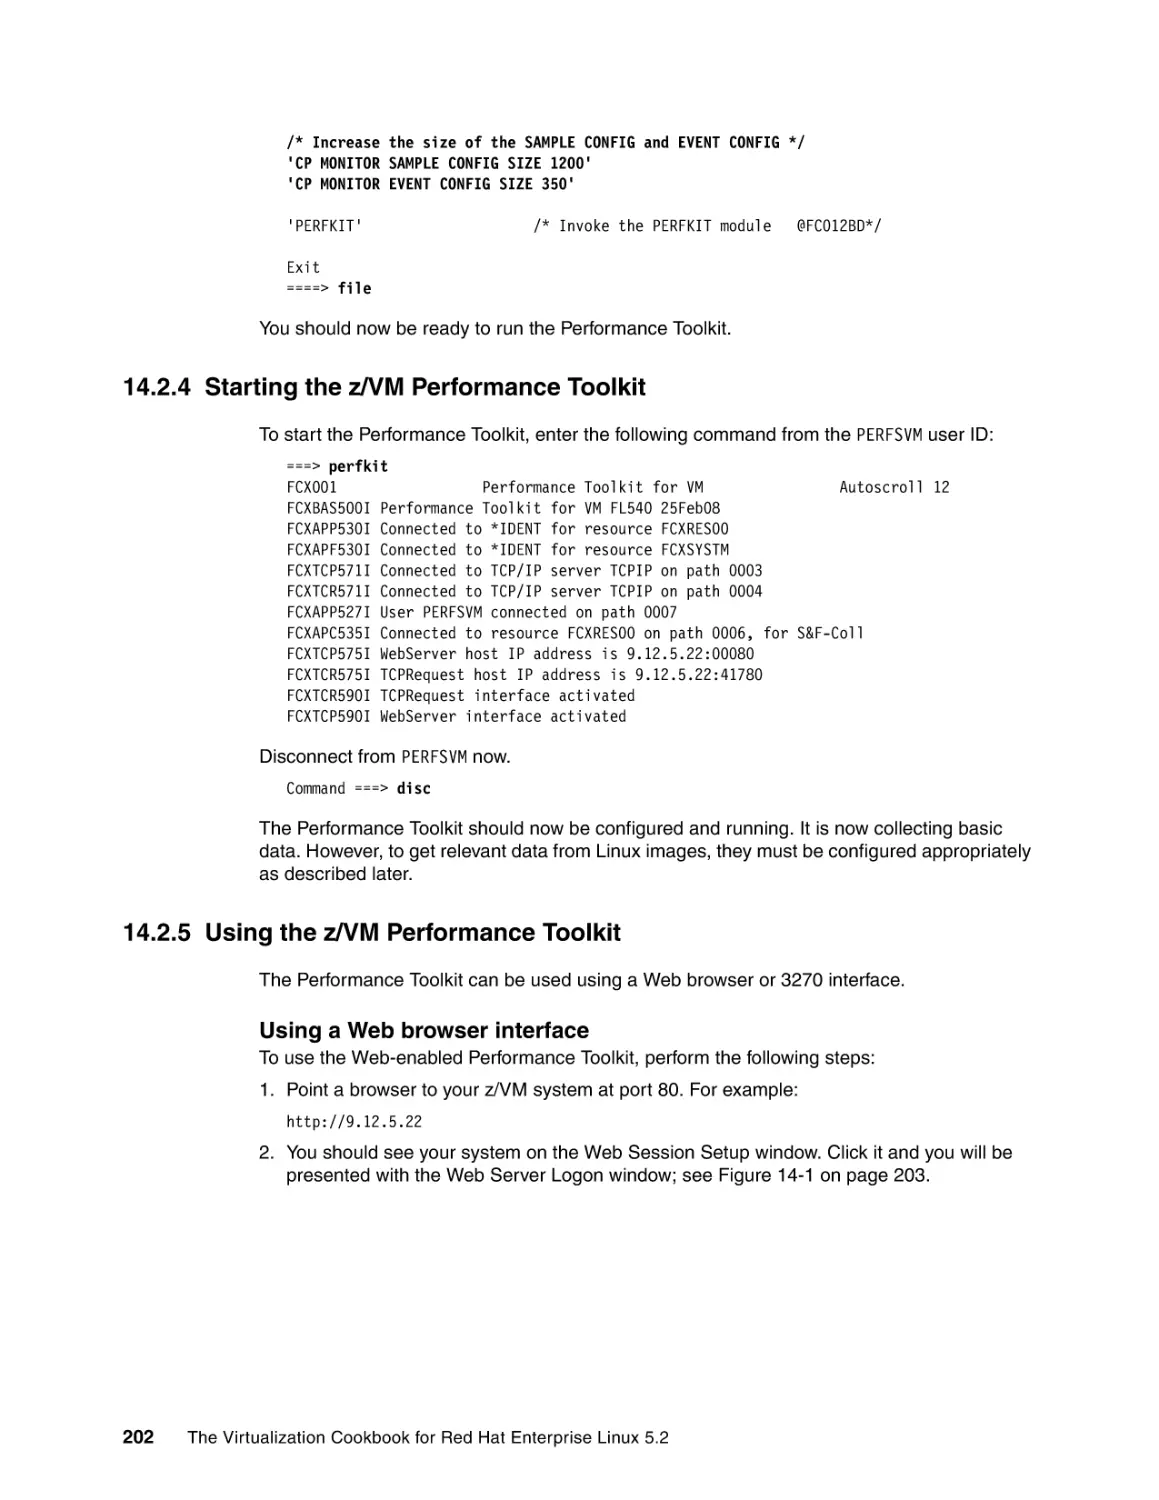 14.2.4 Starting the z/VM Performance Toolkit
14.2.5 Using the z/VM Performance Toolkit